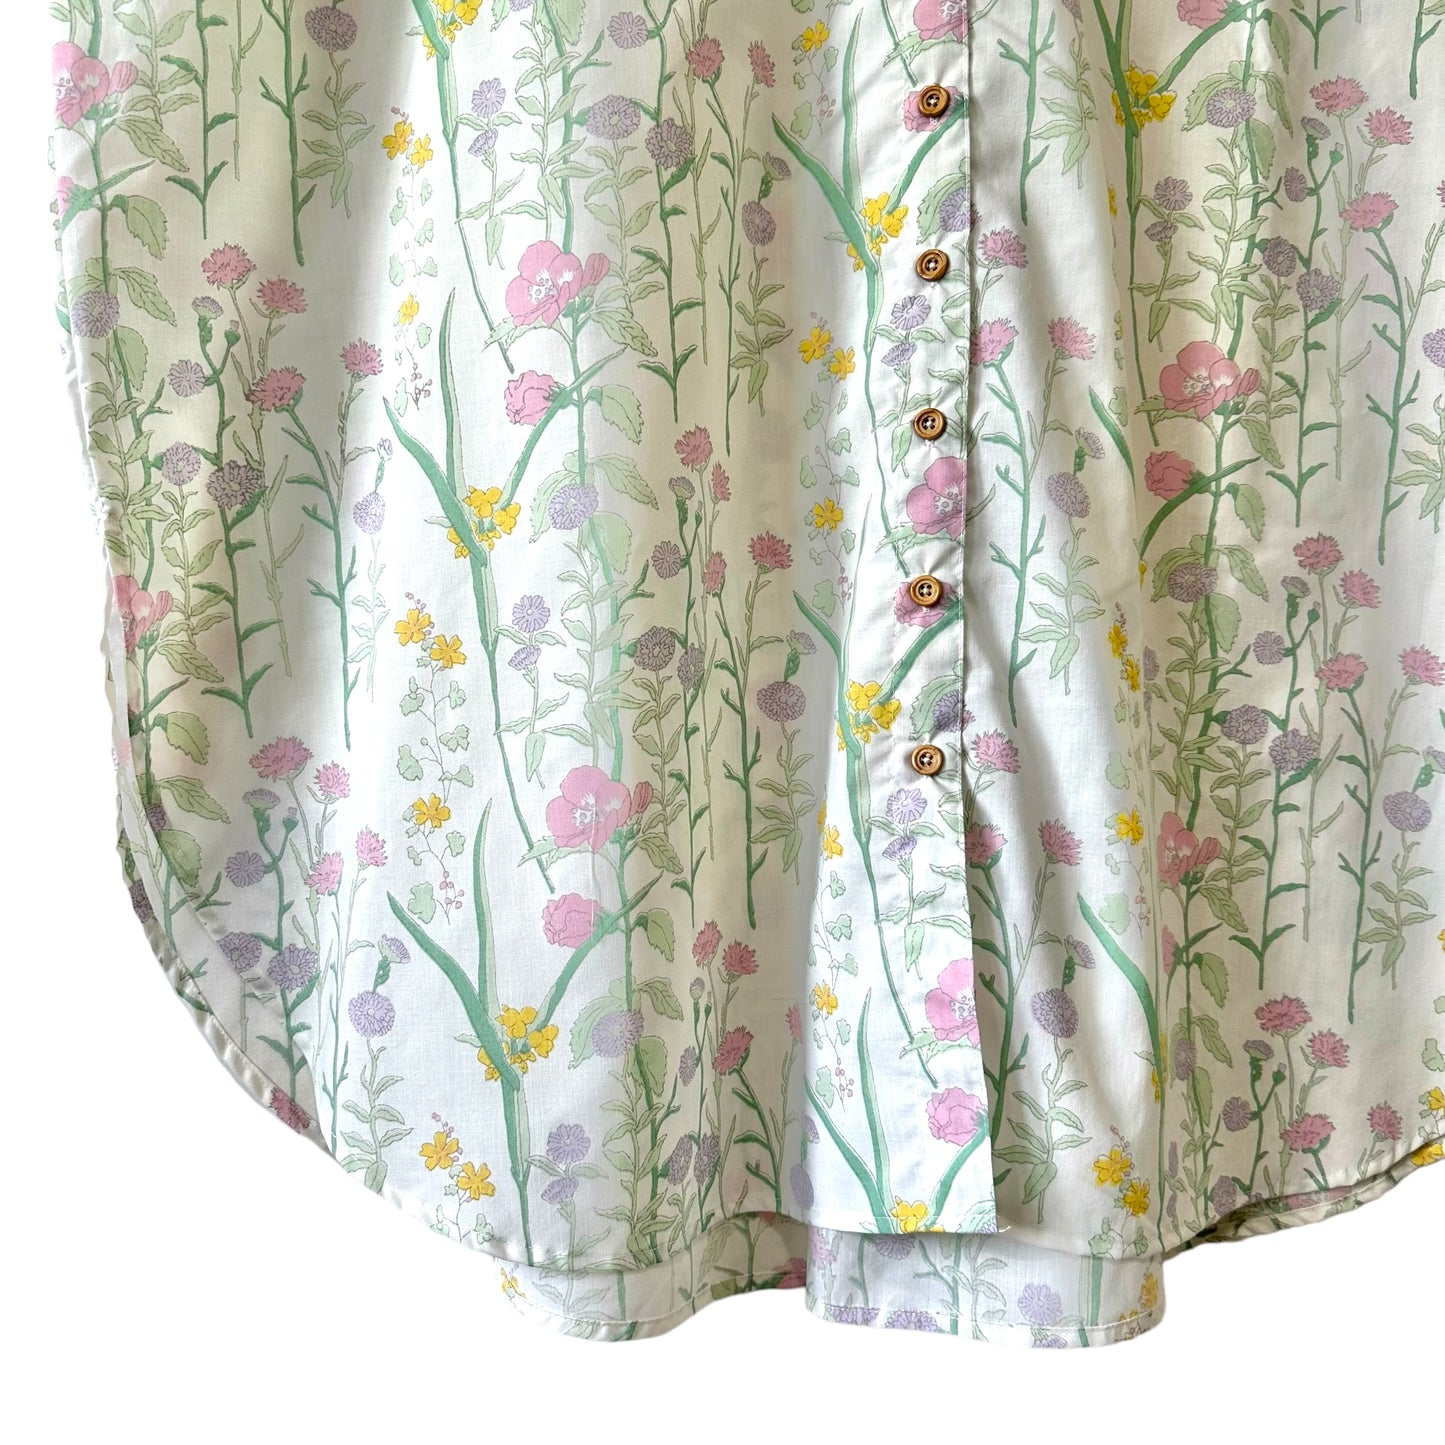 Astoria ‘Spring Flowers’ Shirt Tunic